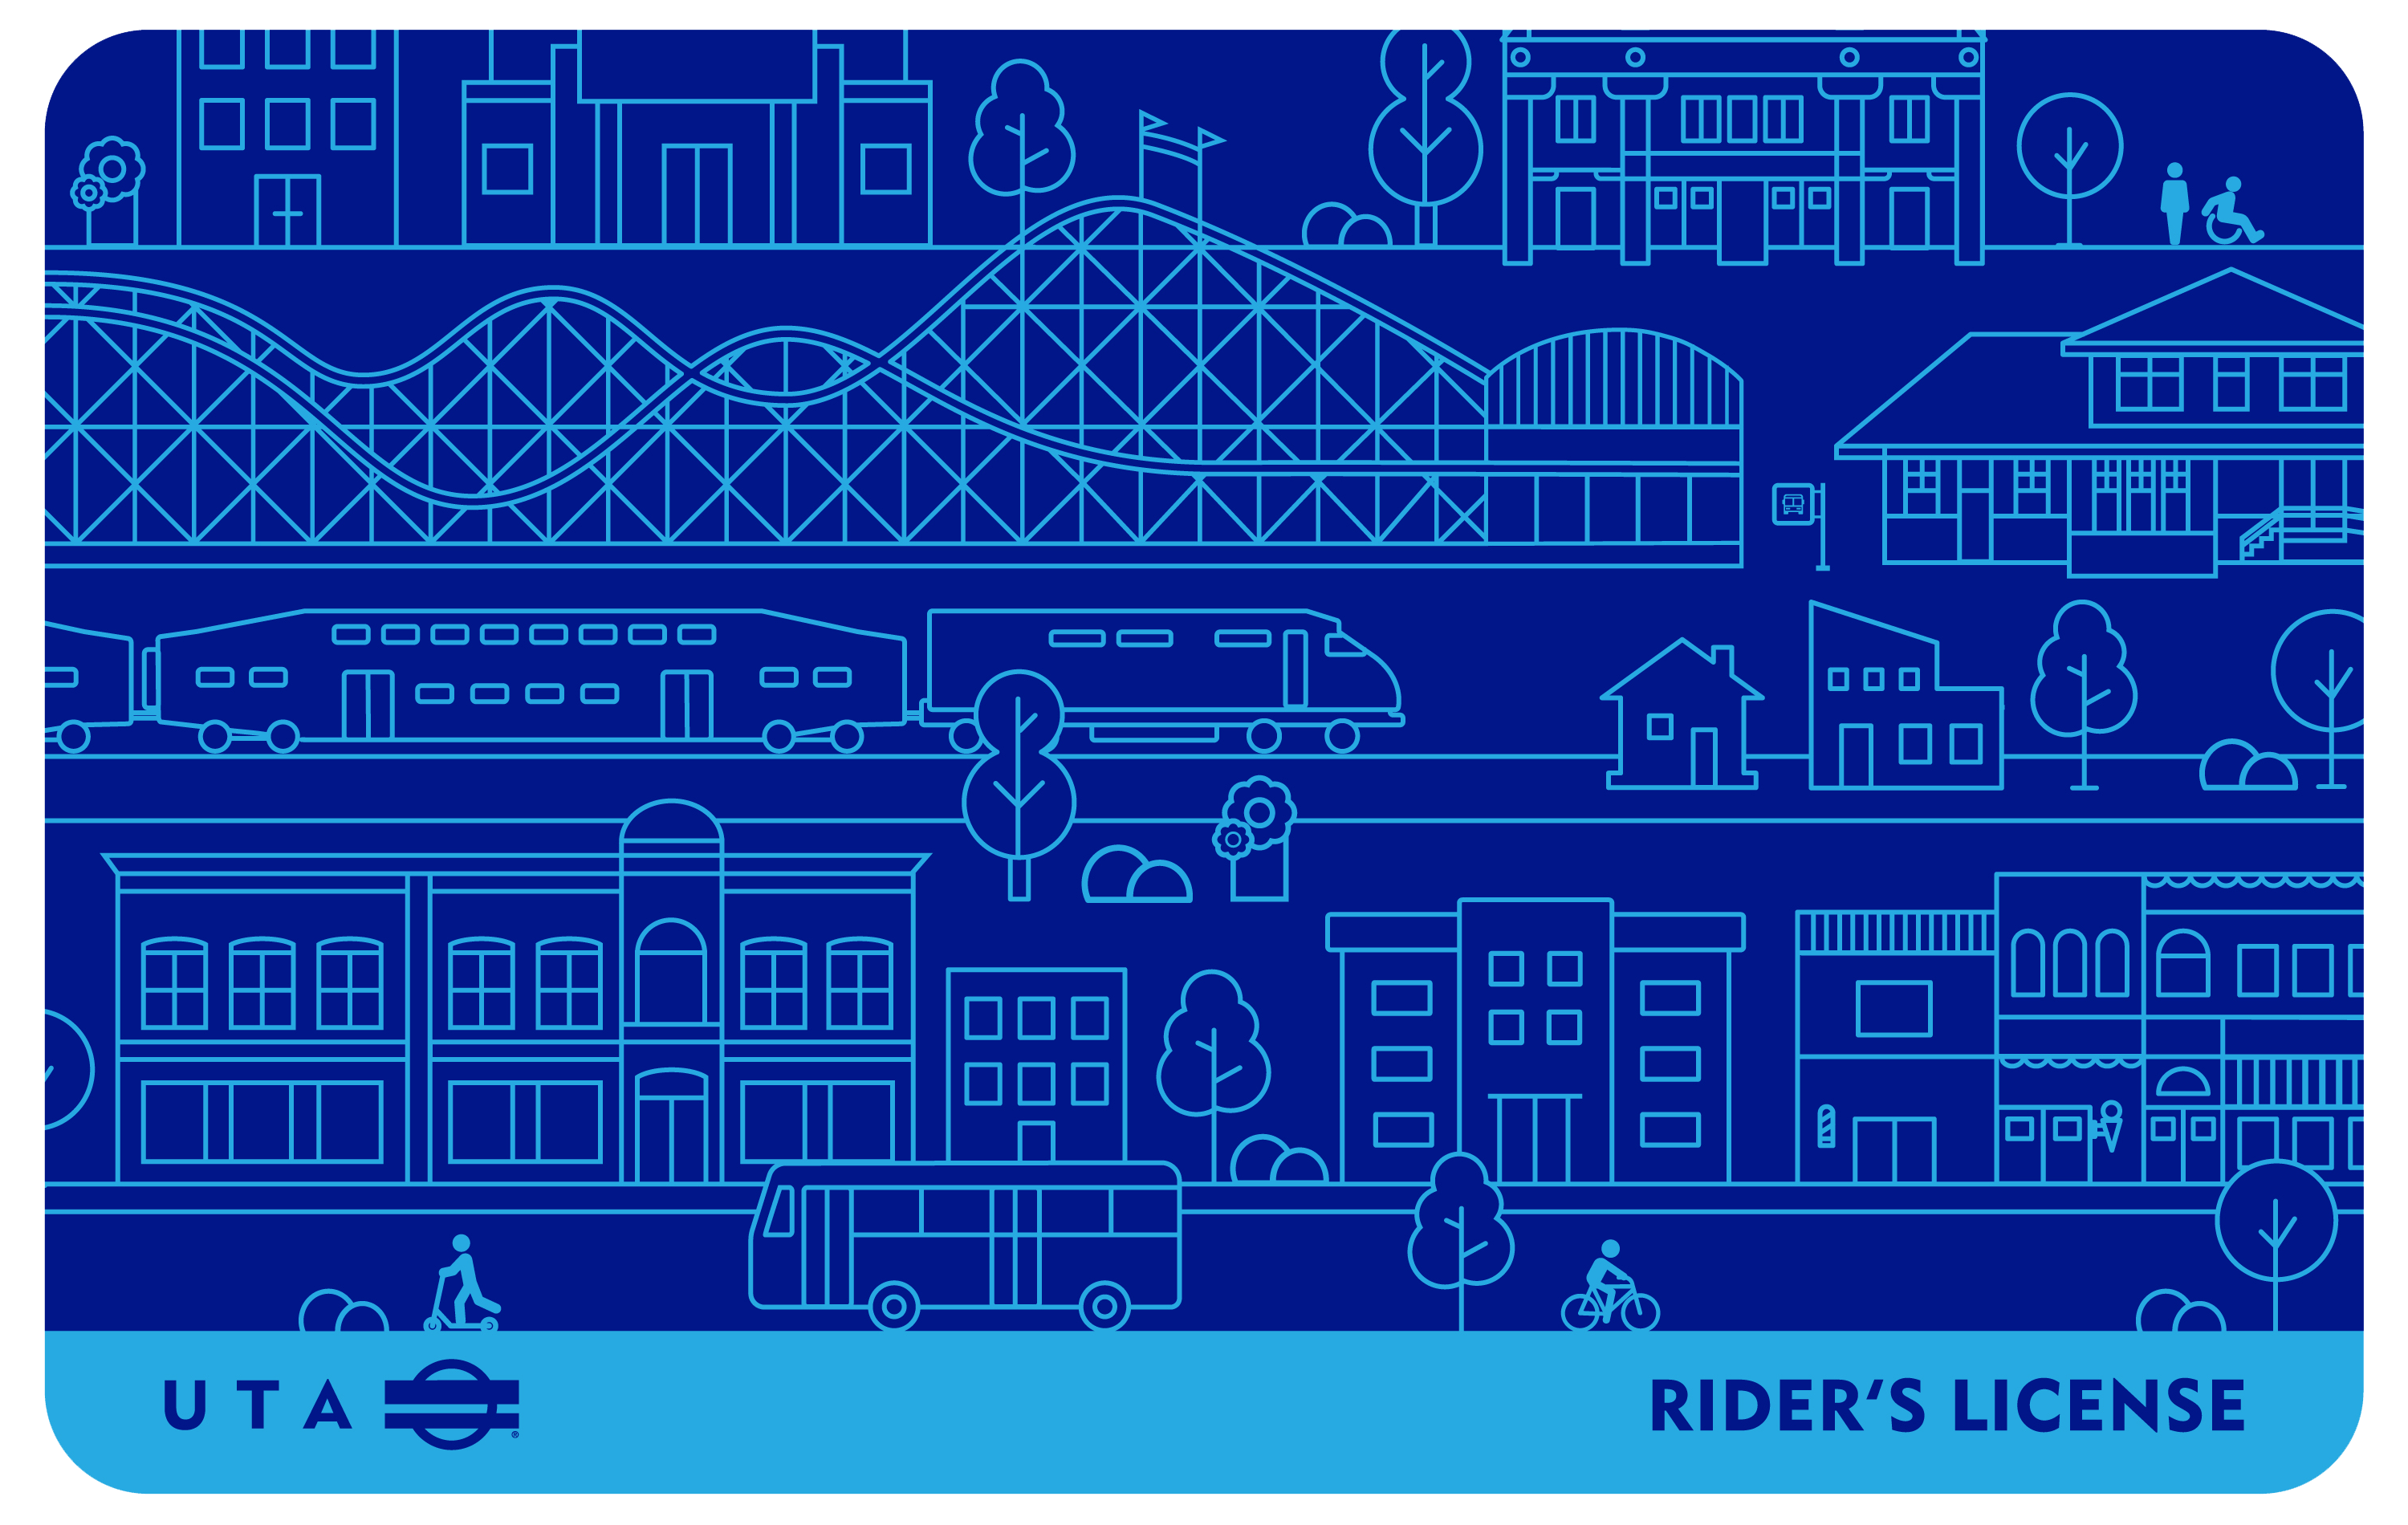 Rider's License Card Image